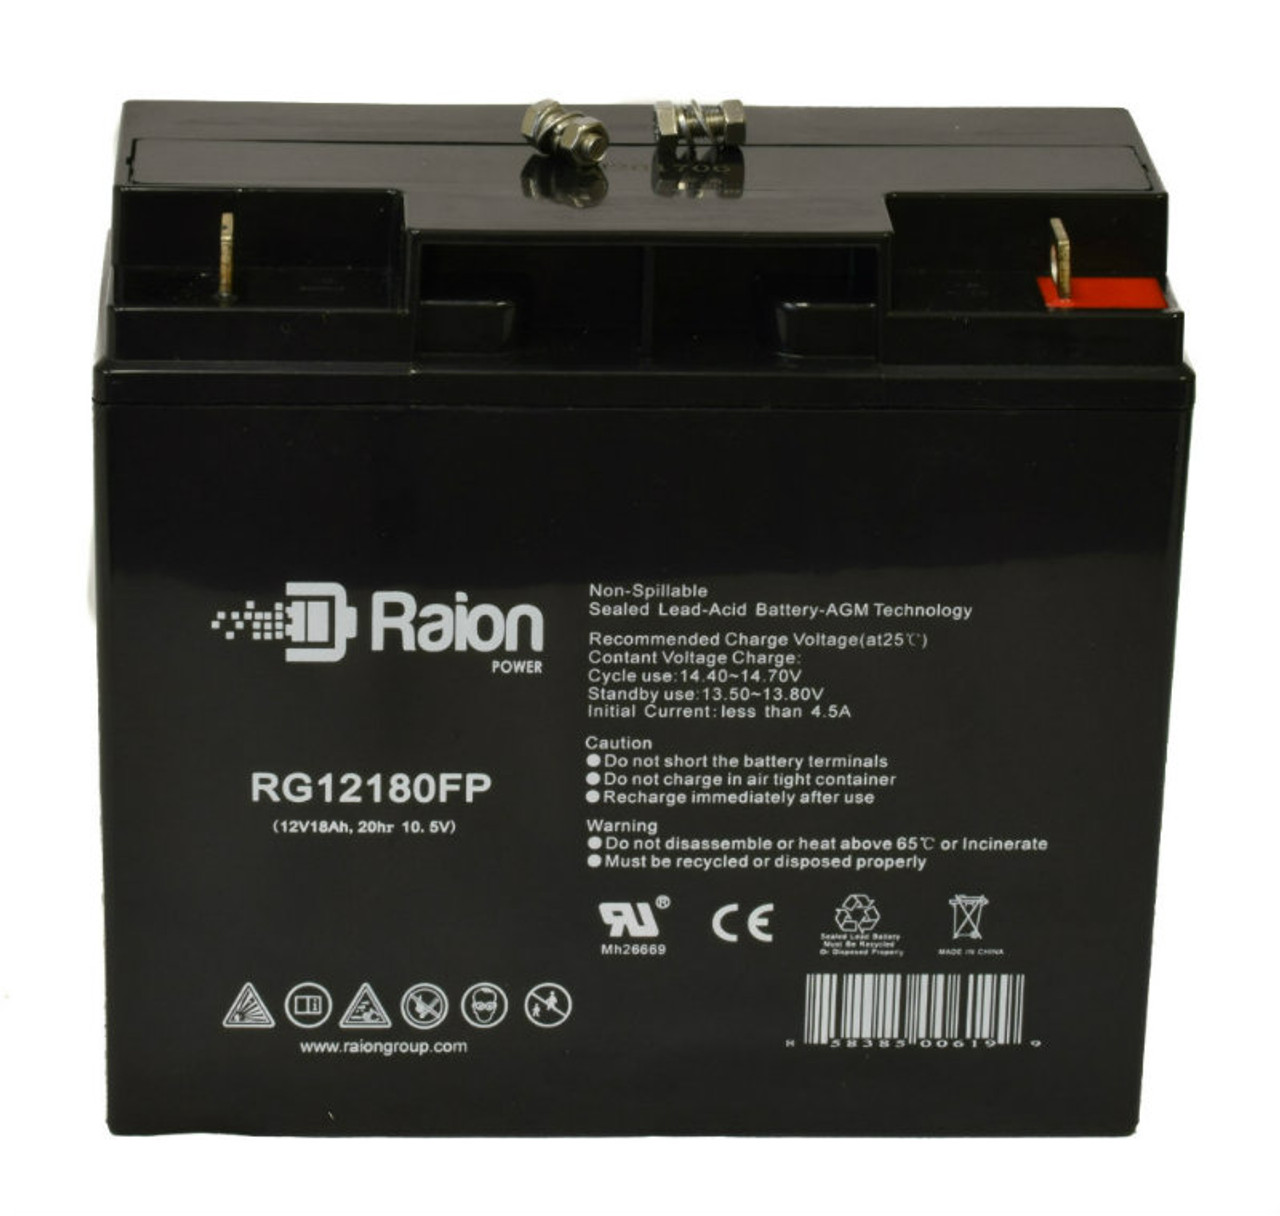 Raion Power RG12180FP 12V 18Ah Lead Acid Battery for Datascope 97e Balloon Pump